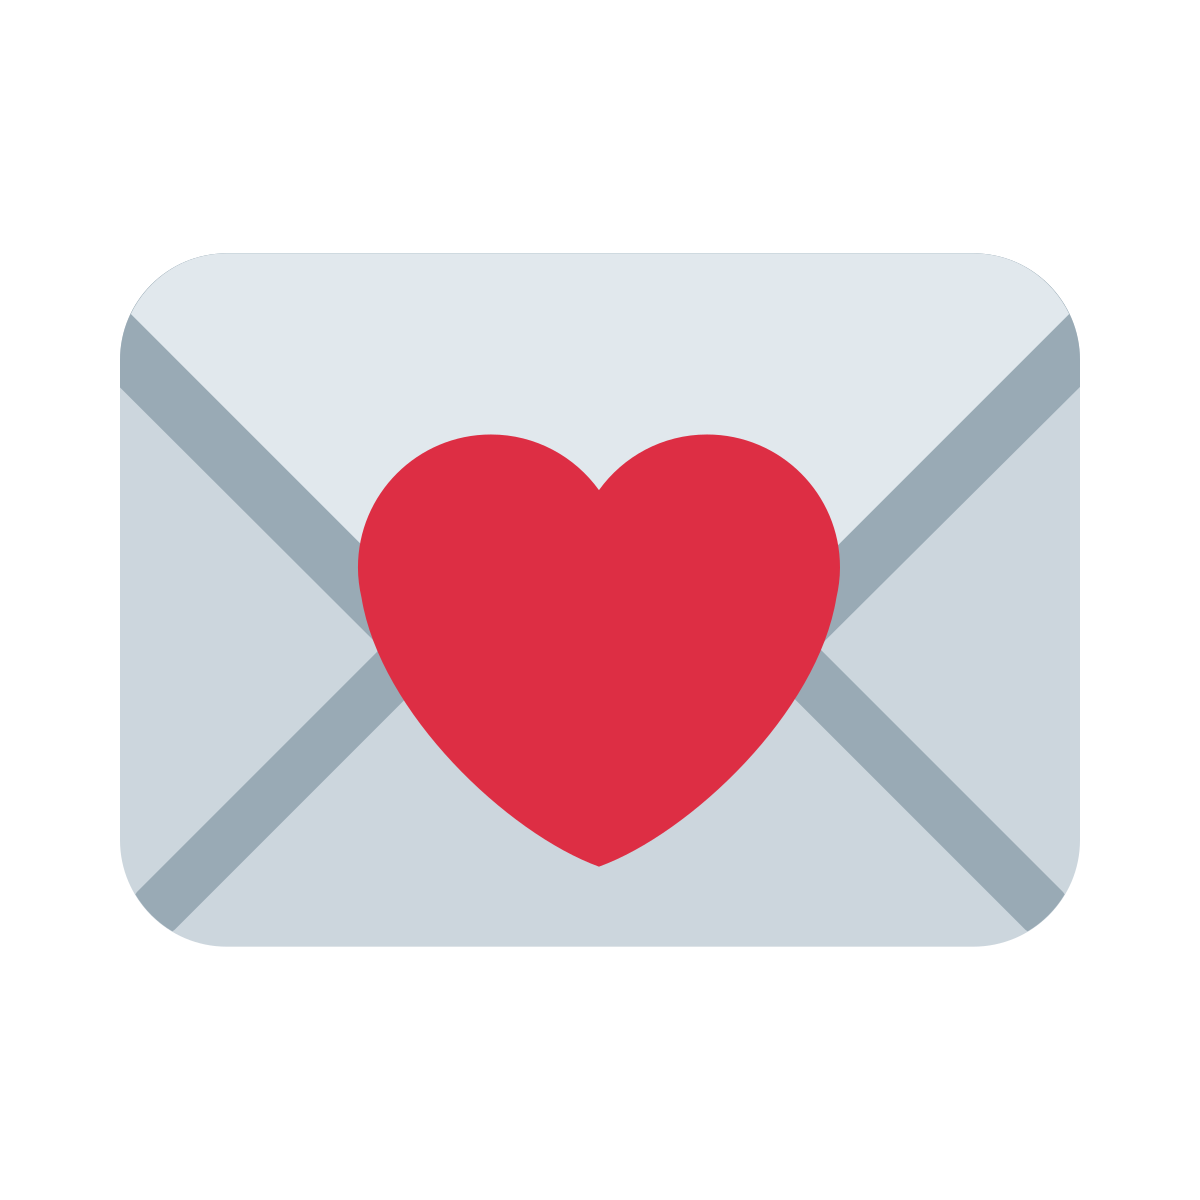 copy and paste love letter emoji